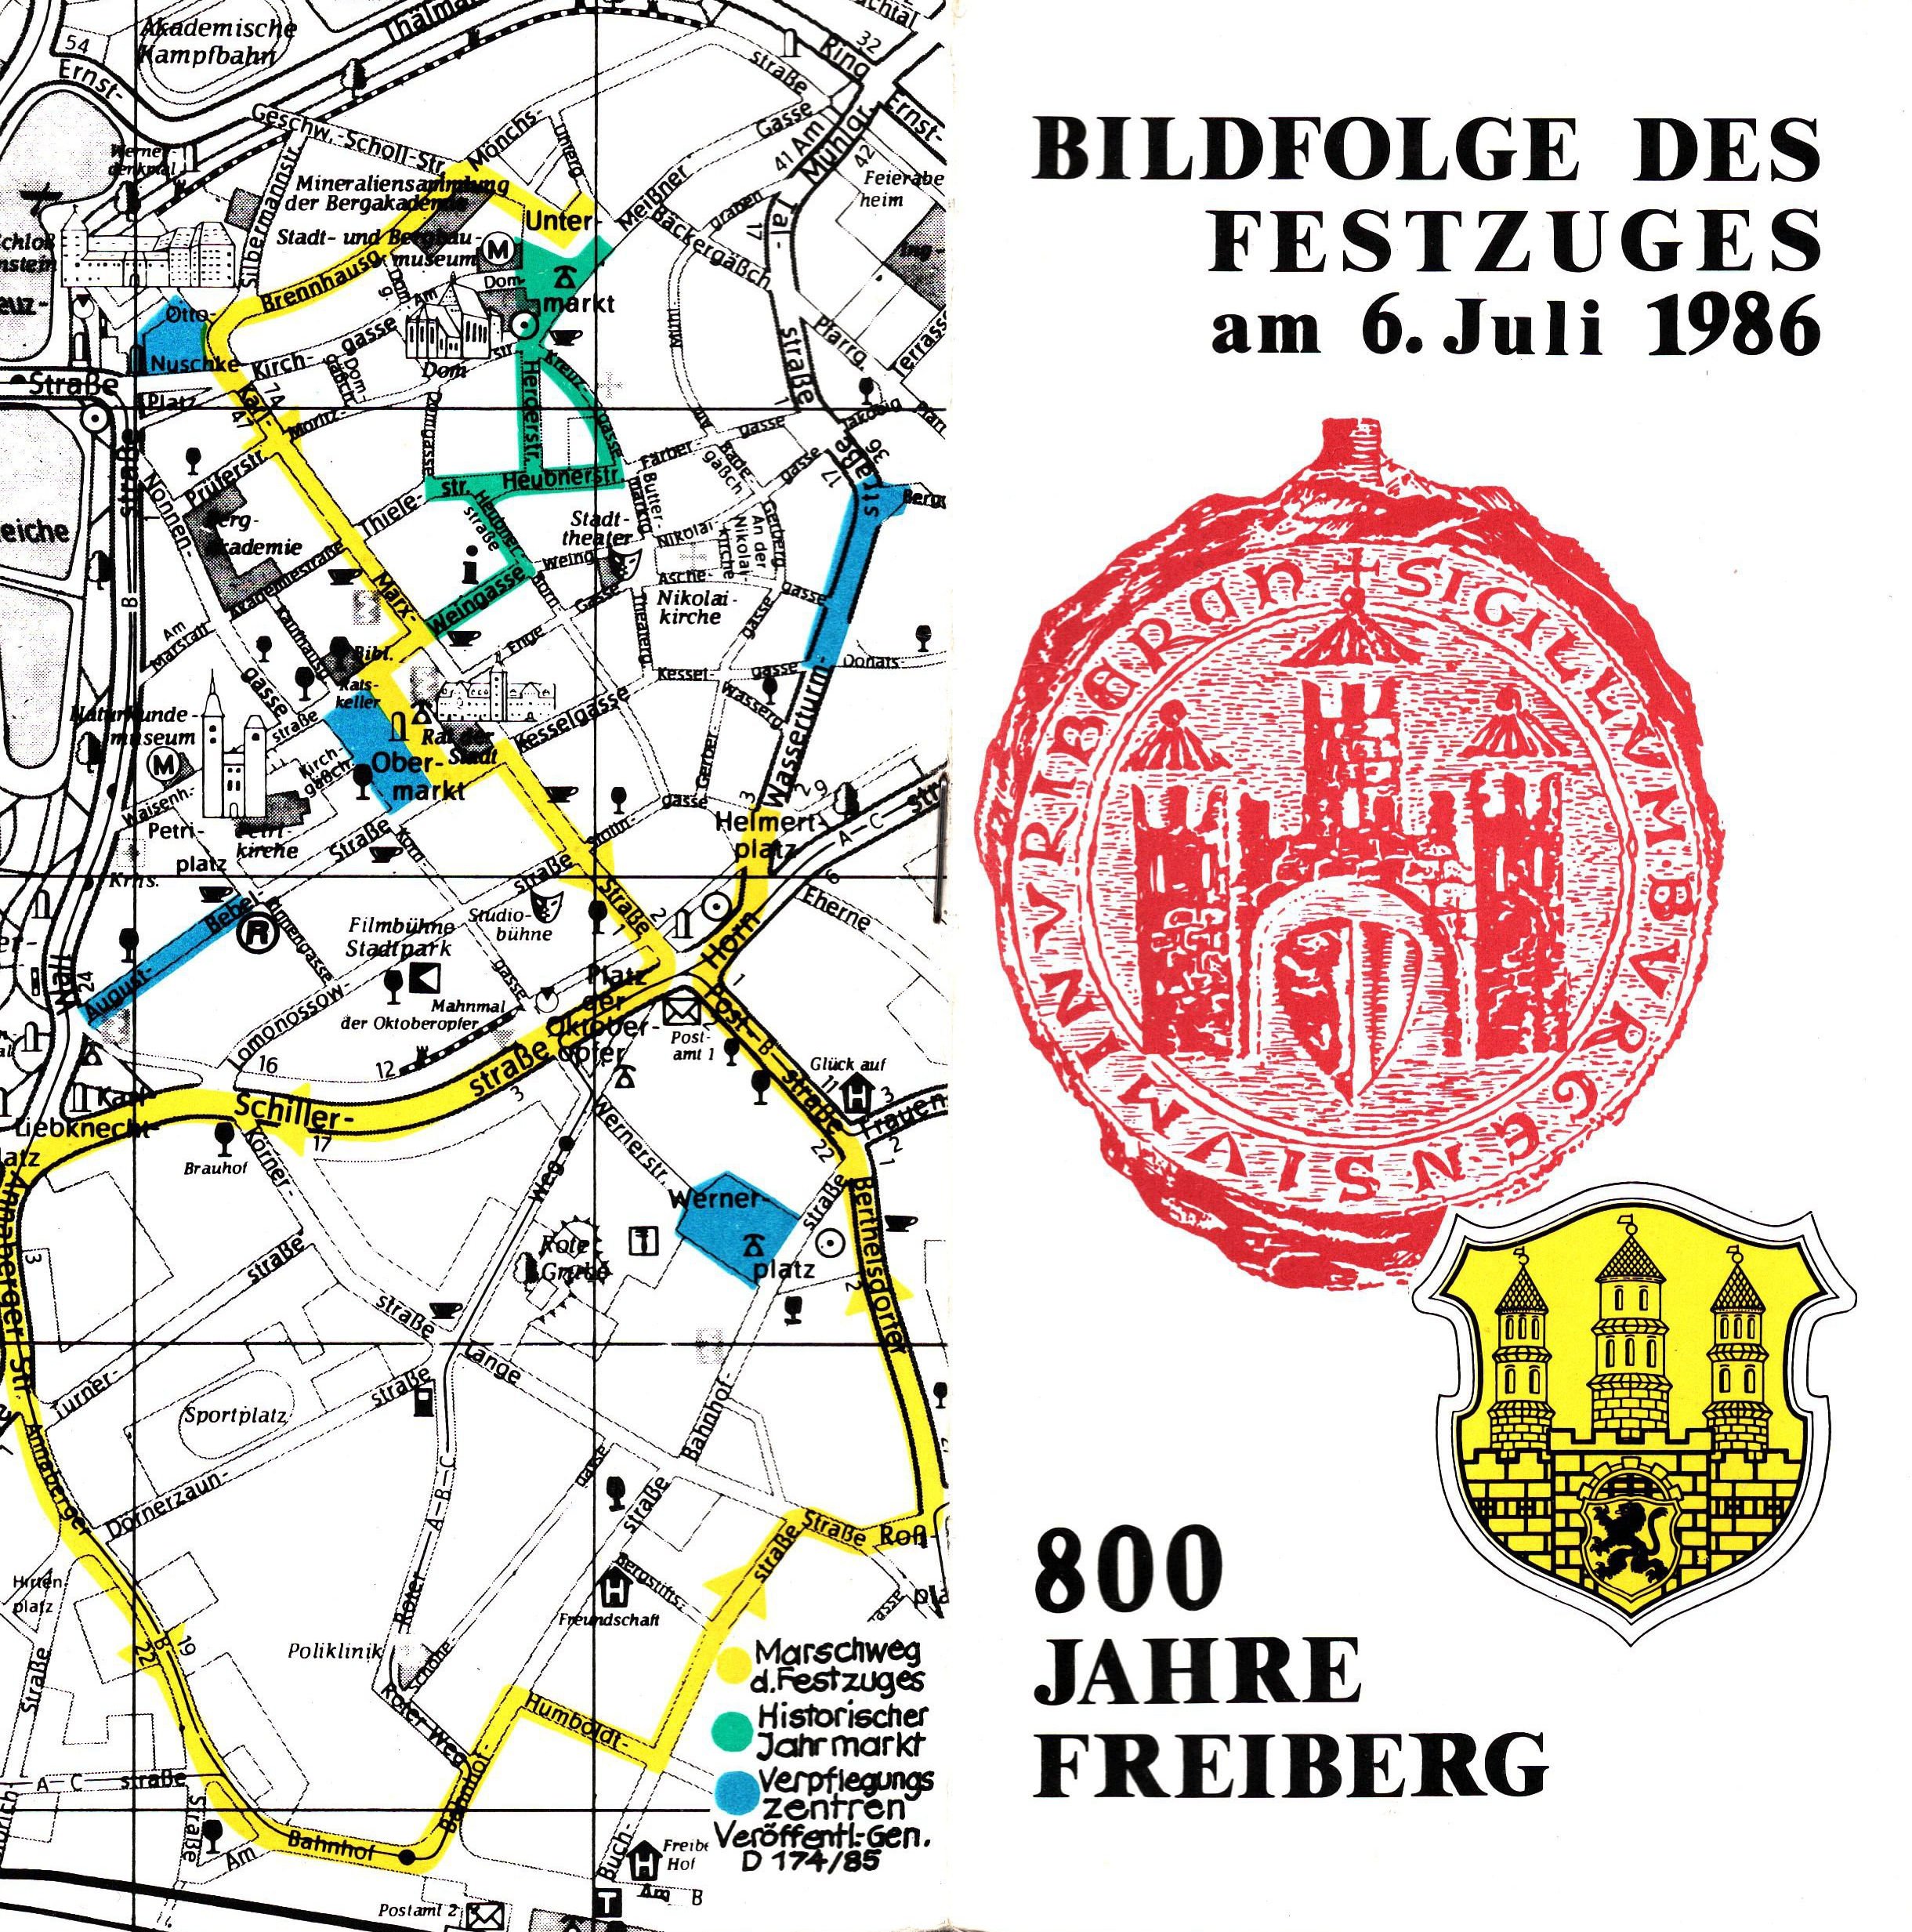 Originaltitel: BILDFOLGE DES FESTZUGES am 6. Juli 1986 - 800 Jahre Freiberg (Saxonia-Freiberg-Stiftung CC BY-NC-SA)